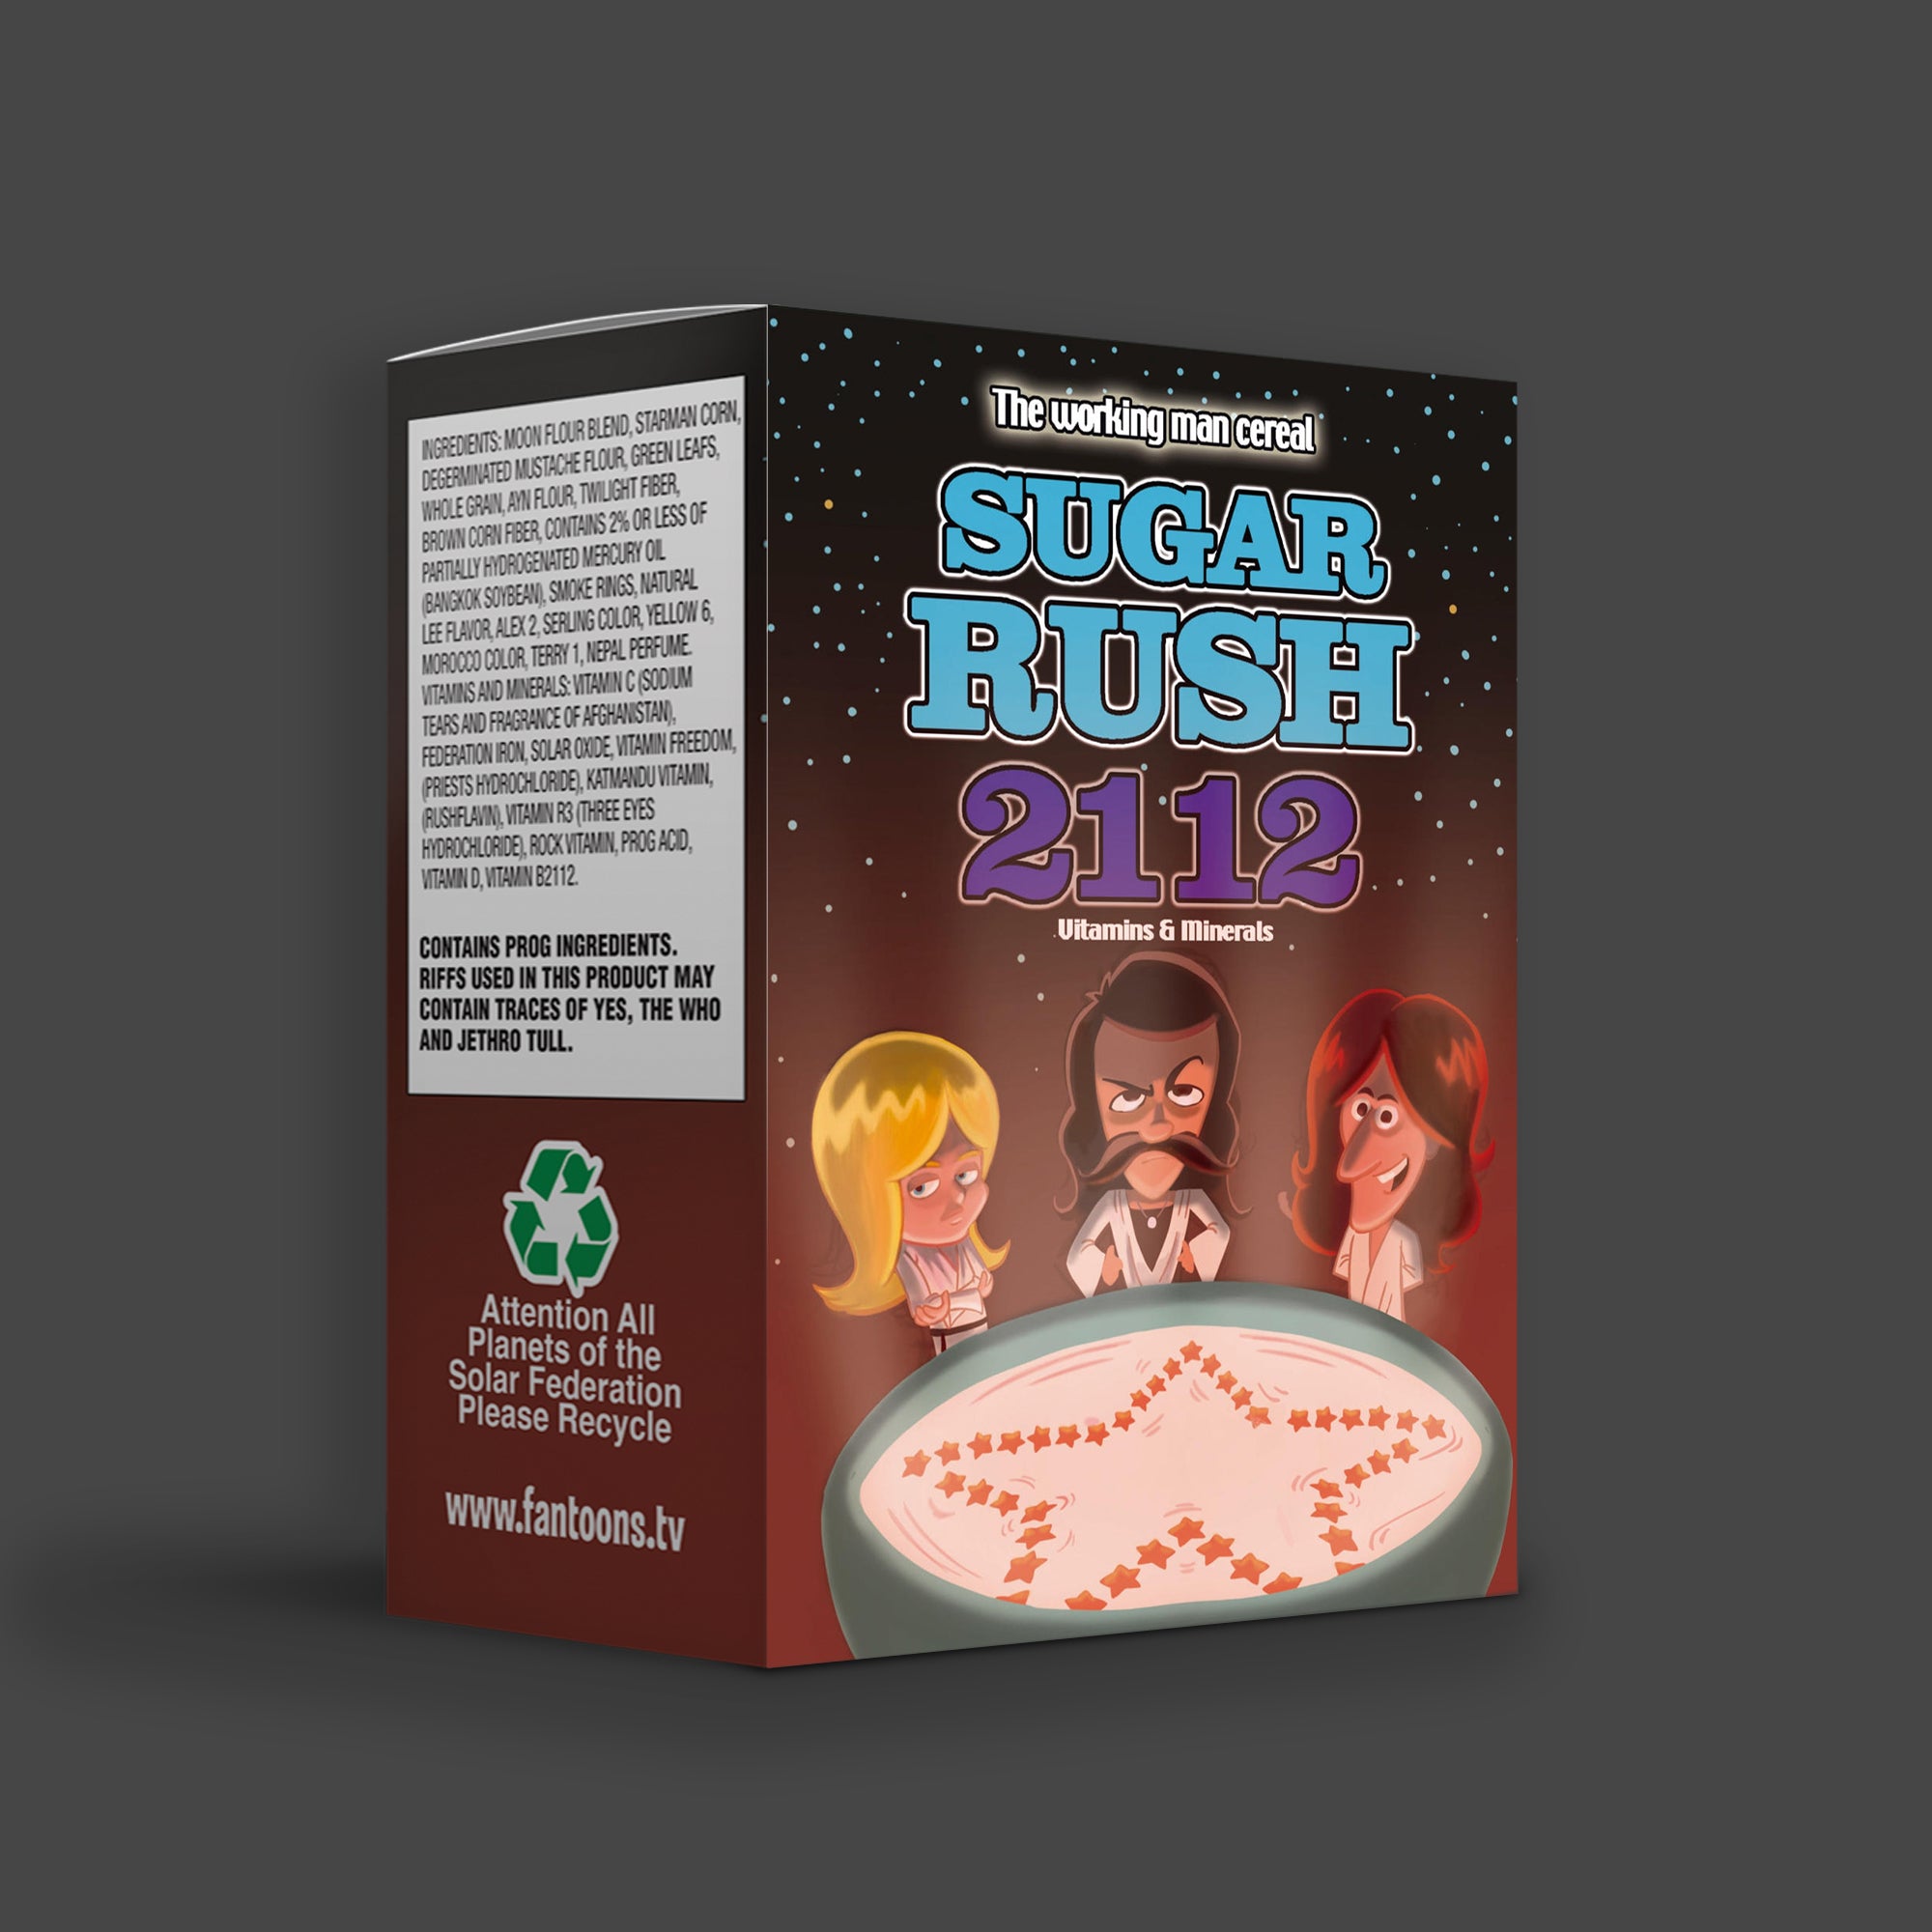 Rush 2112 Decorative Cereal Box